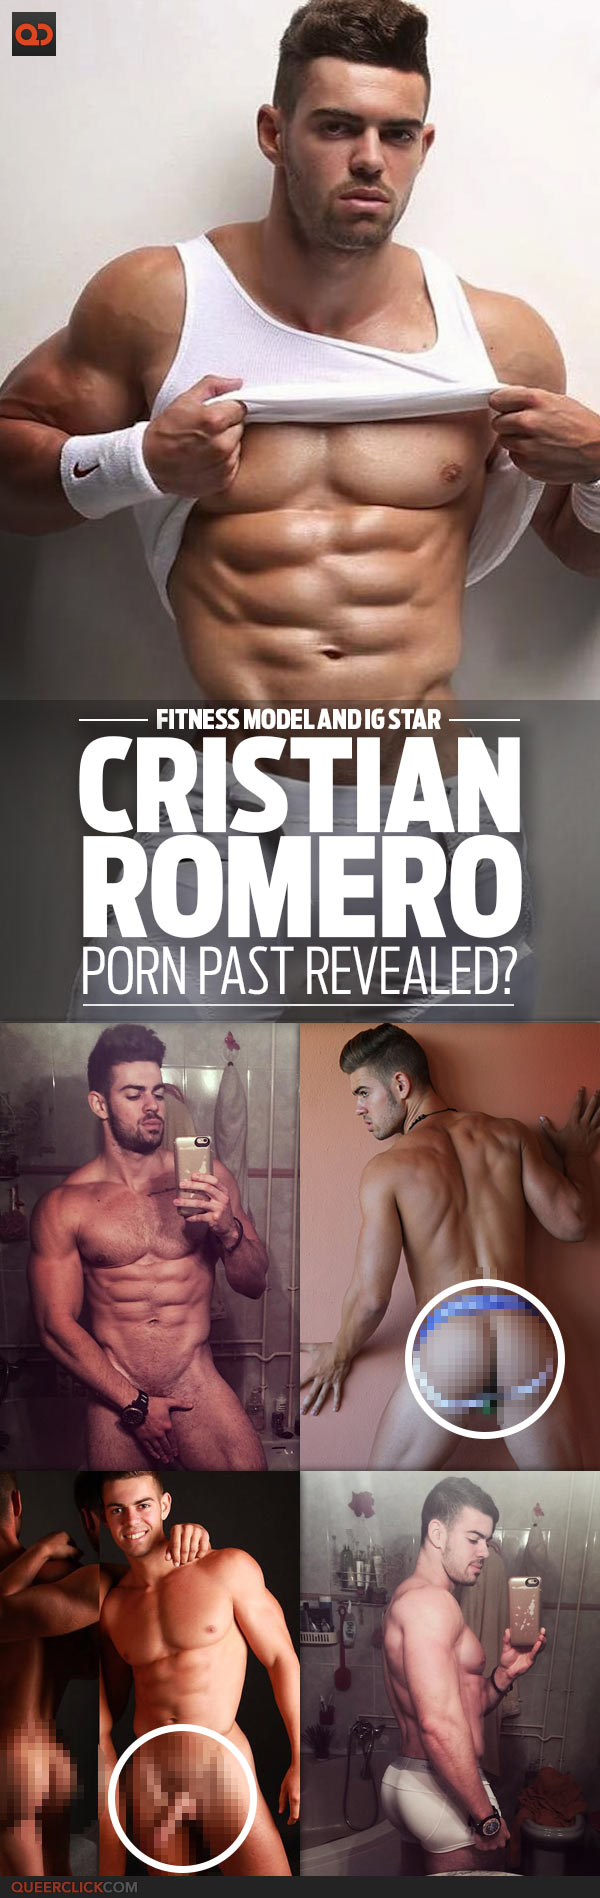 qc-fitness_model_cristian_romero_porn_past_revealed-teaser